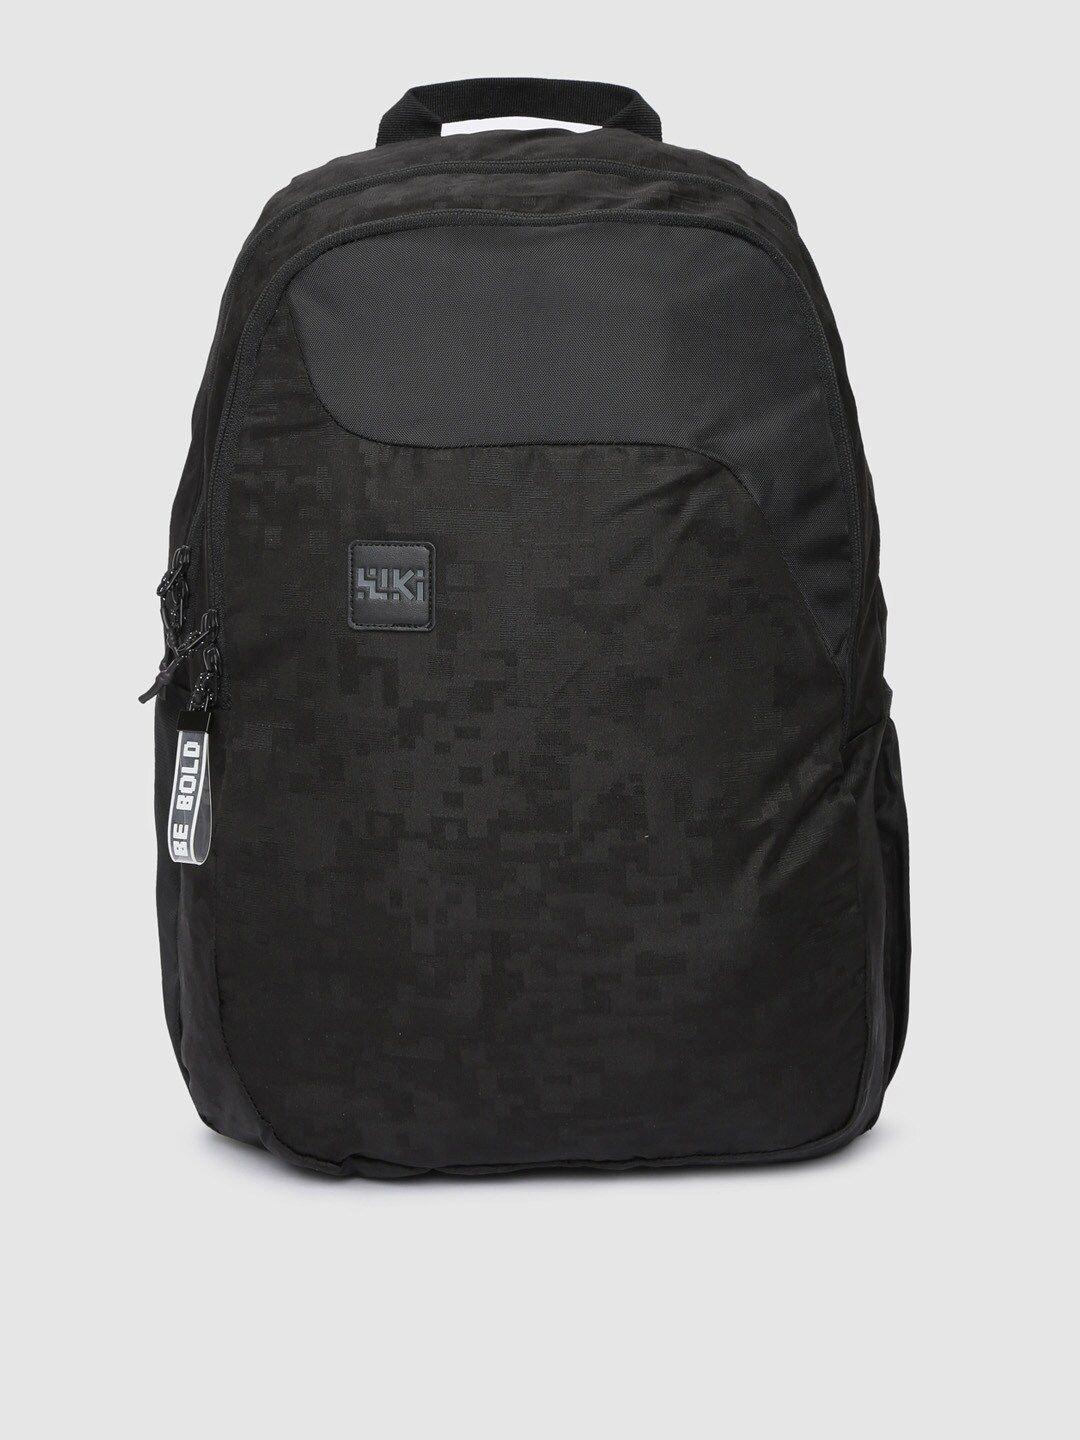 wildcraft unisex black solid backpack